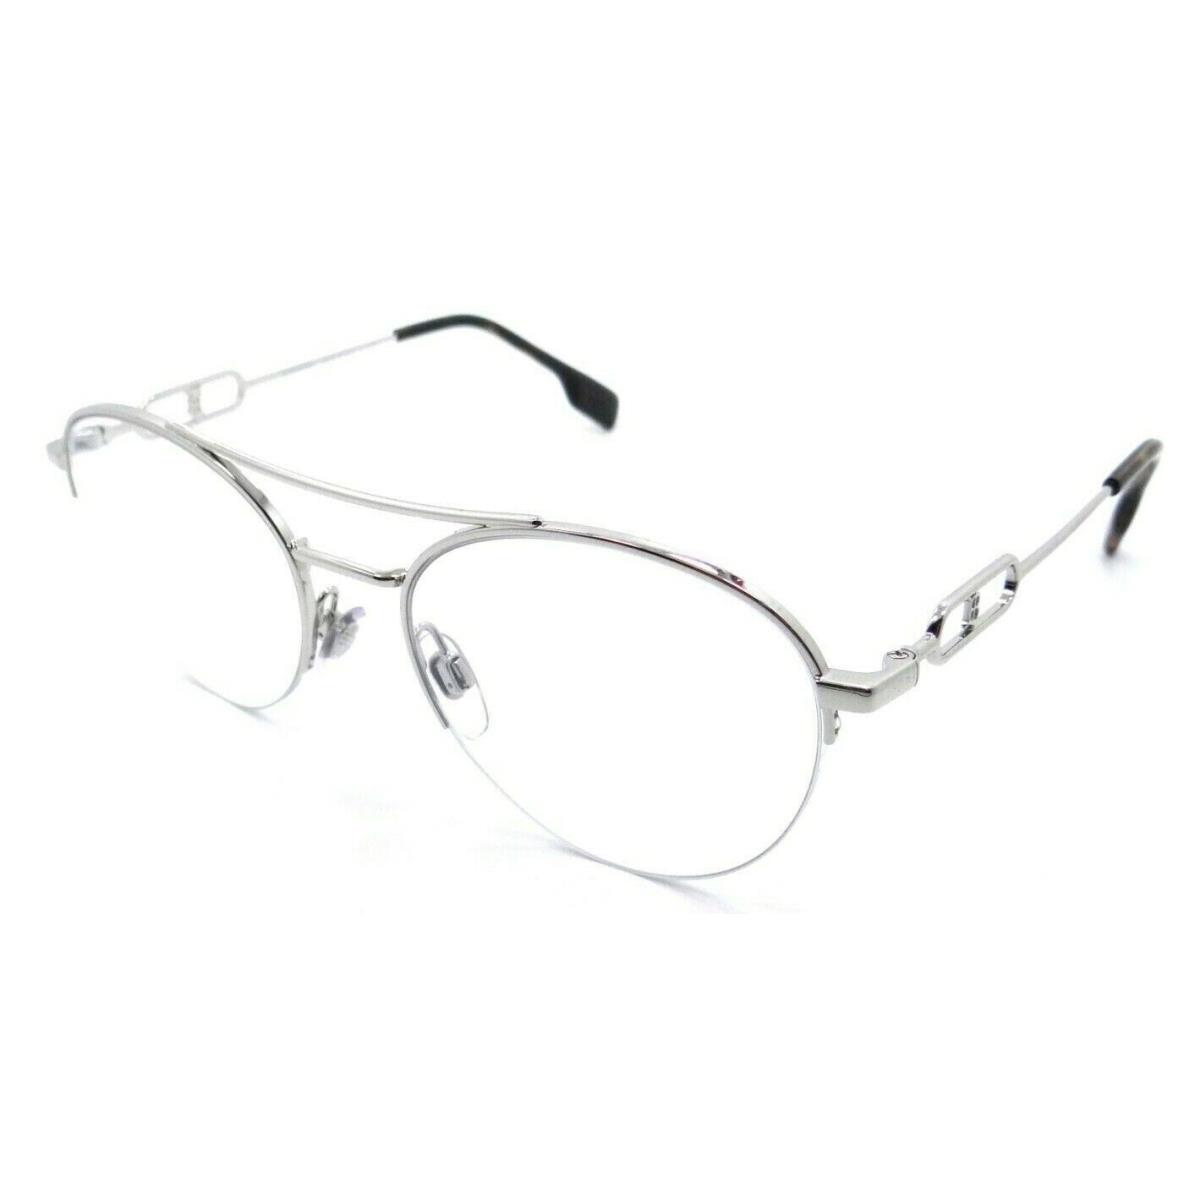 Burberry Eyeglasses Frames BE 1354 1005 51-18-140 Silver/clear Blue Light Filter